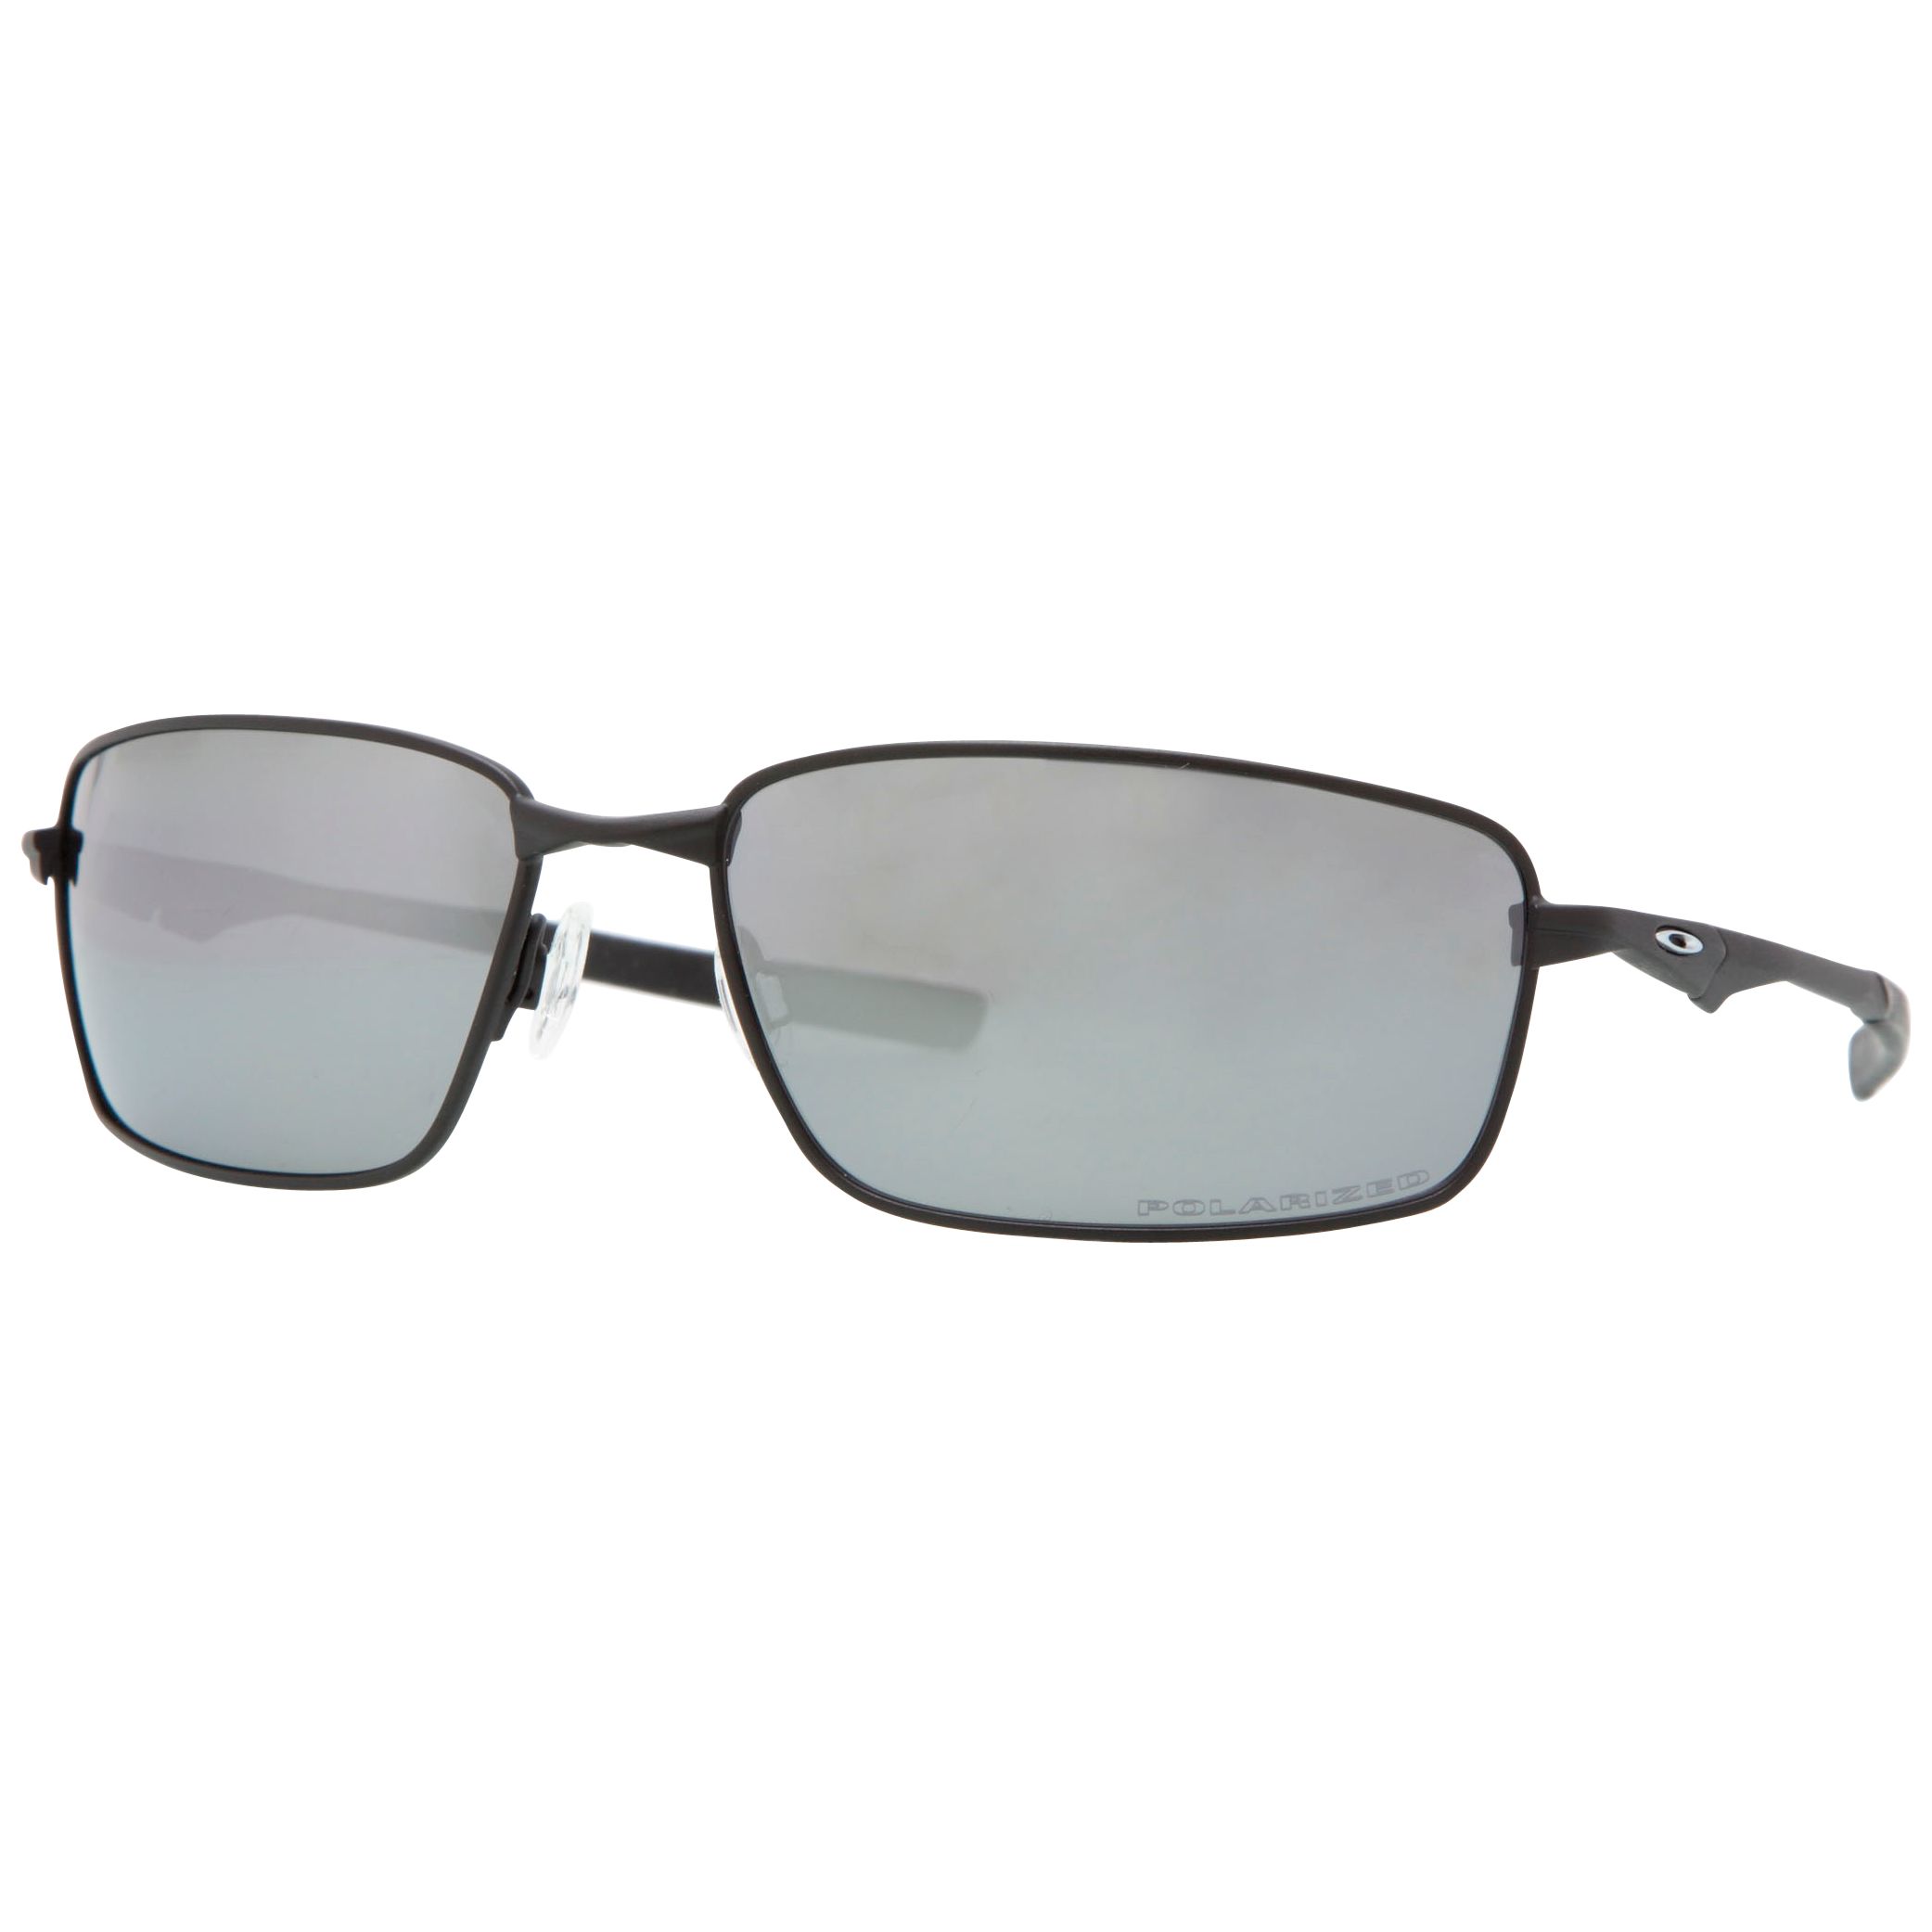 Oakley Splinter Men's Rectangular Metal Sunglasses, Black at JohnLewis